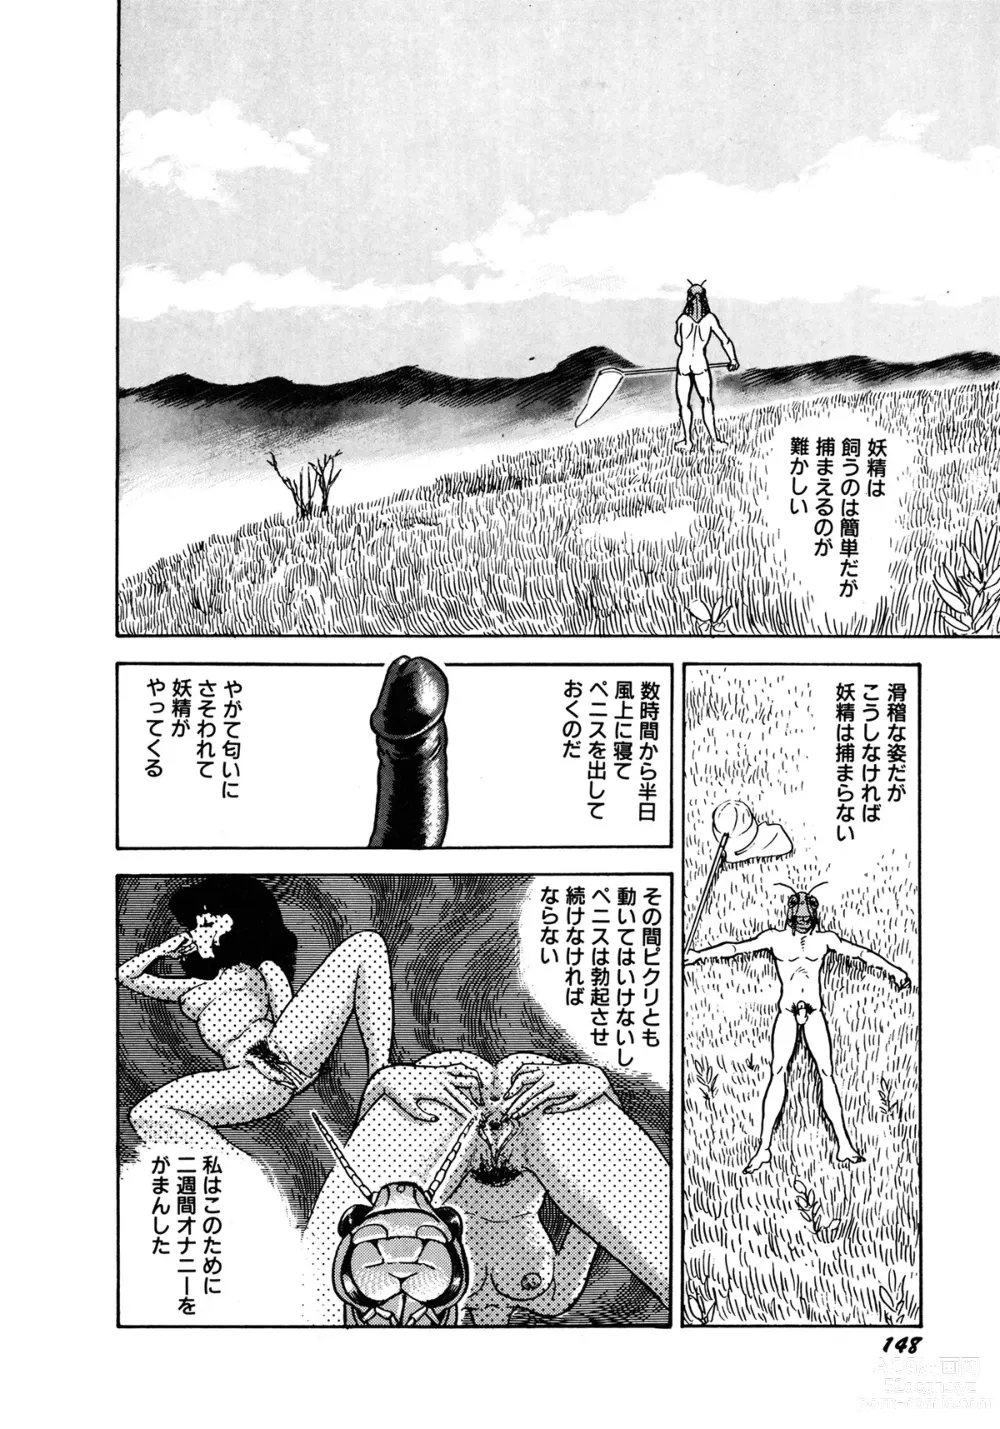 Page 151 of manga Insect Hunter